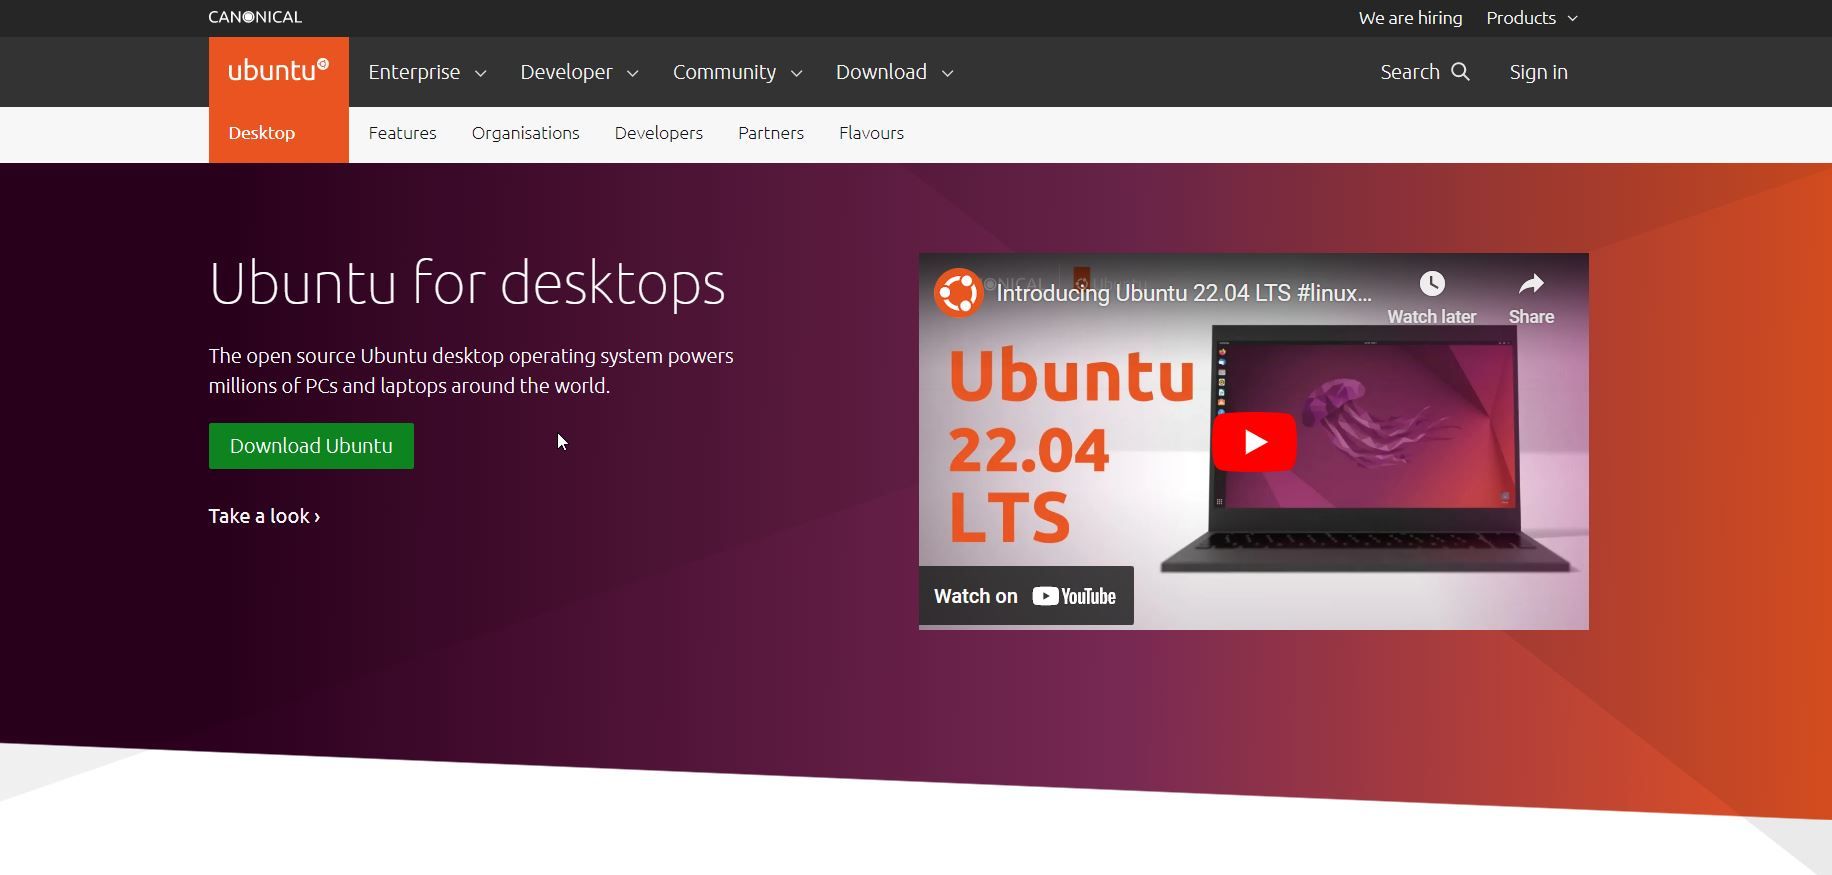 Ubuntu desktop page